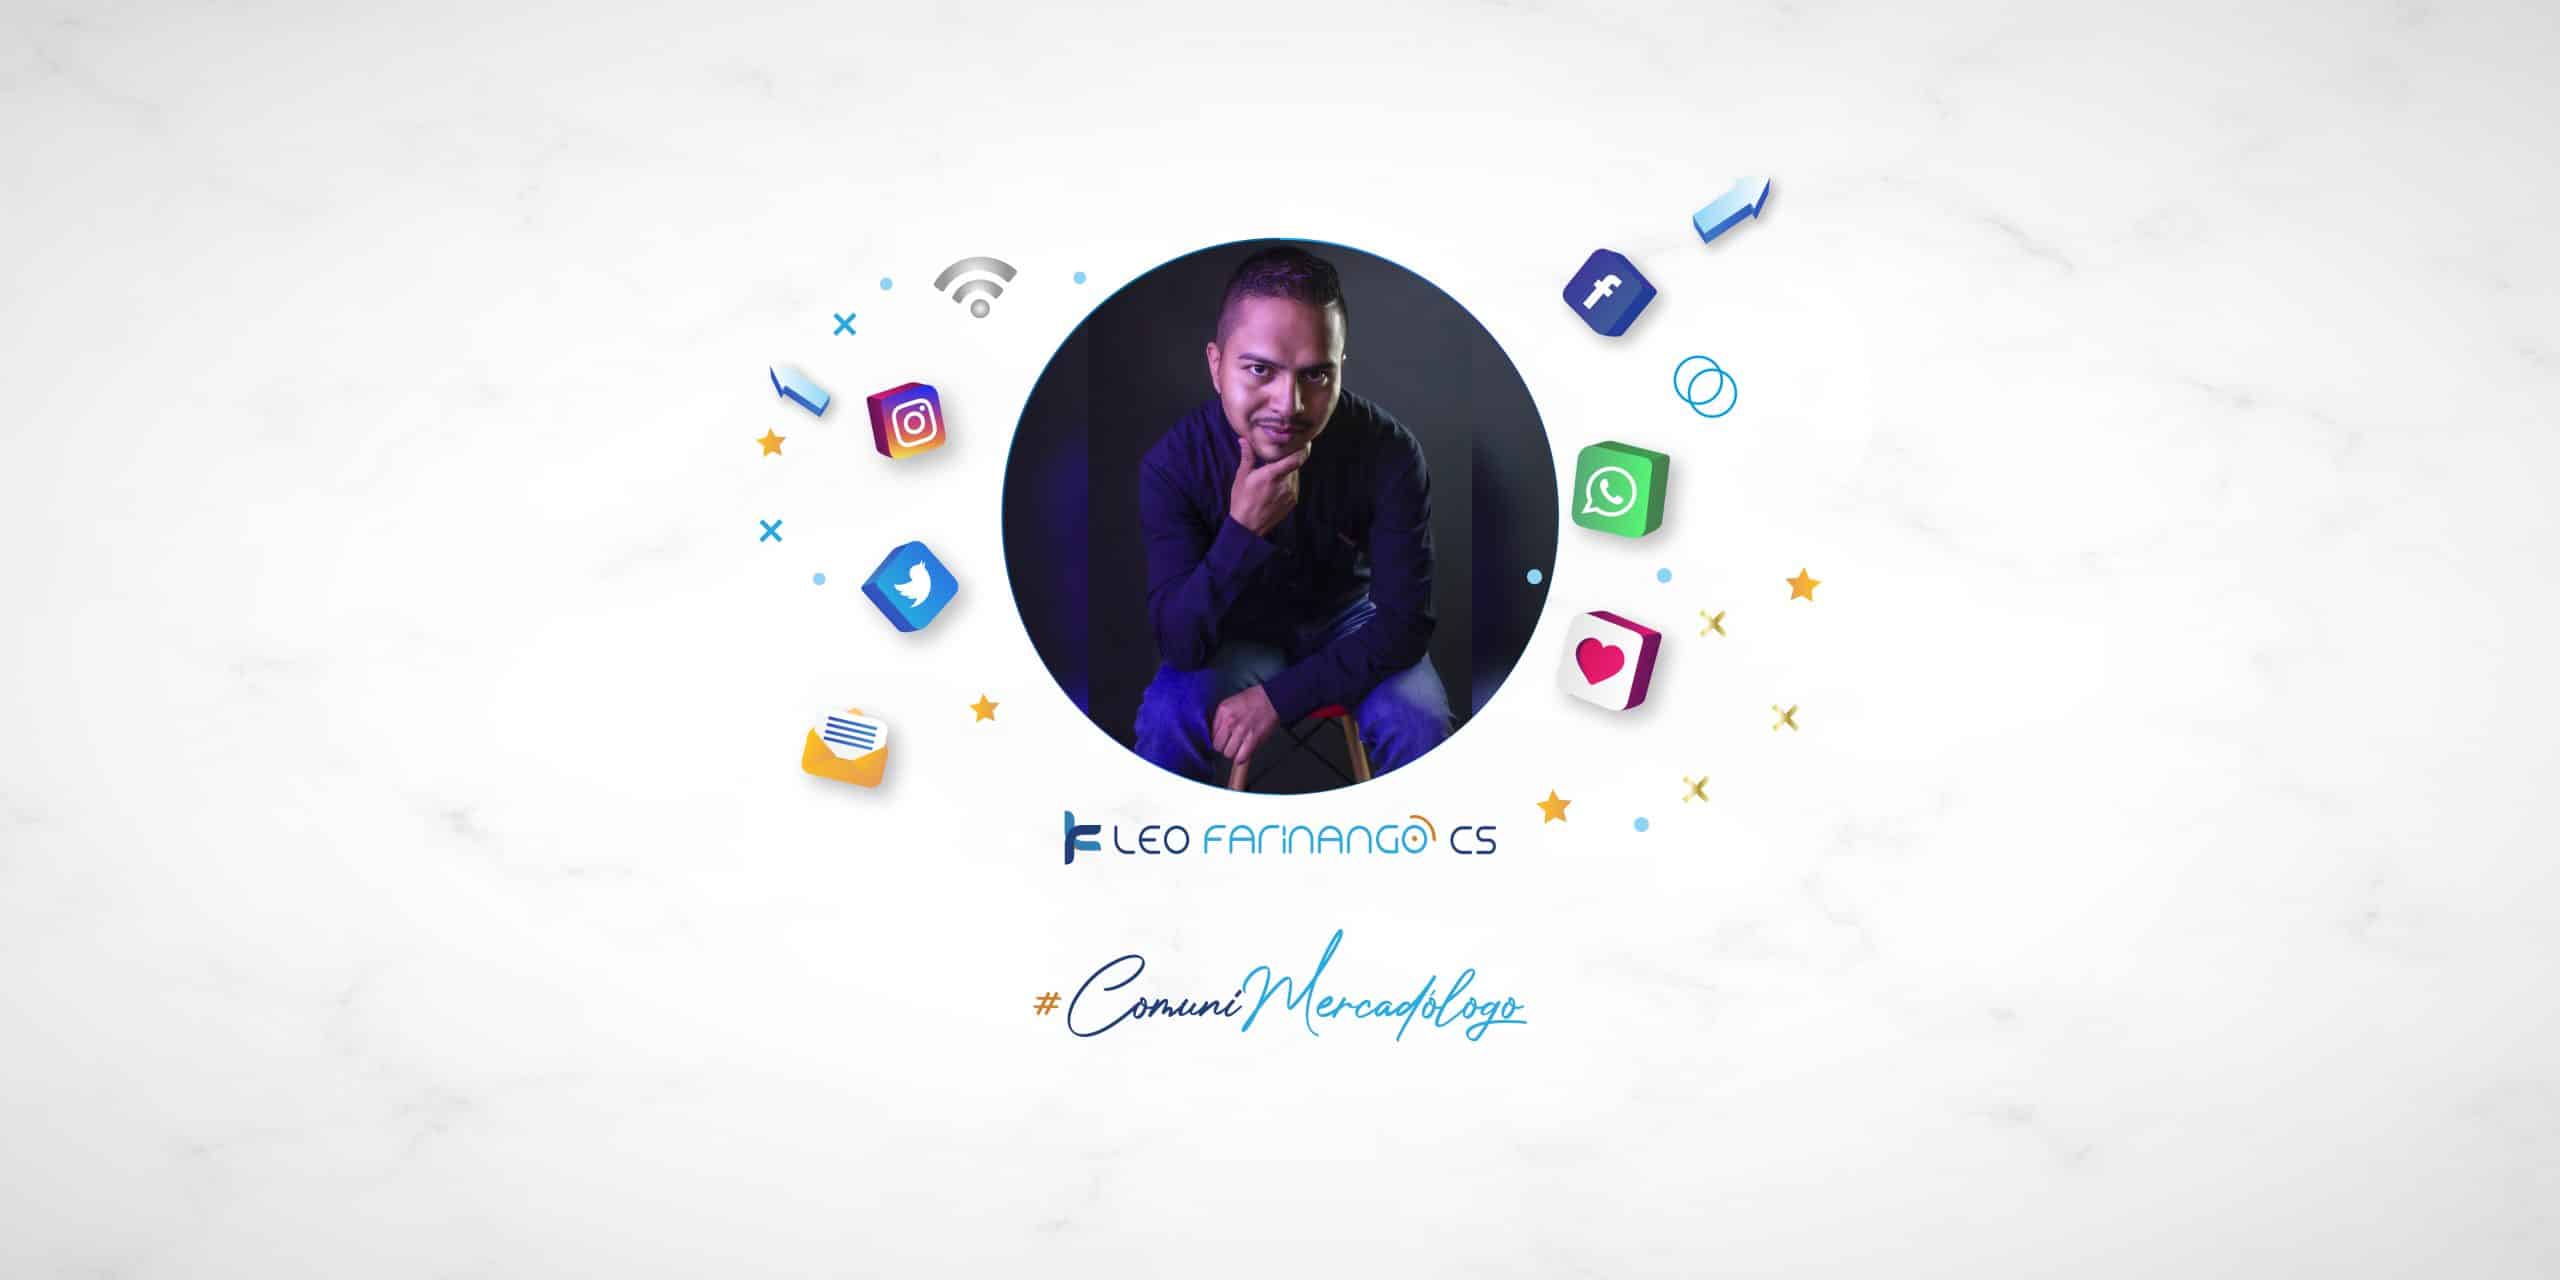 Leo-Farinango-CS-Comunicador-Marketing-Digital-Quito-Ecuador-Social-Media --